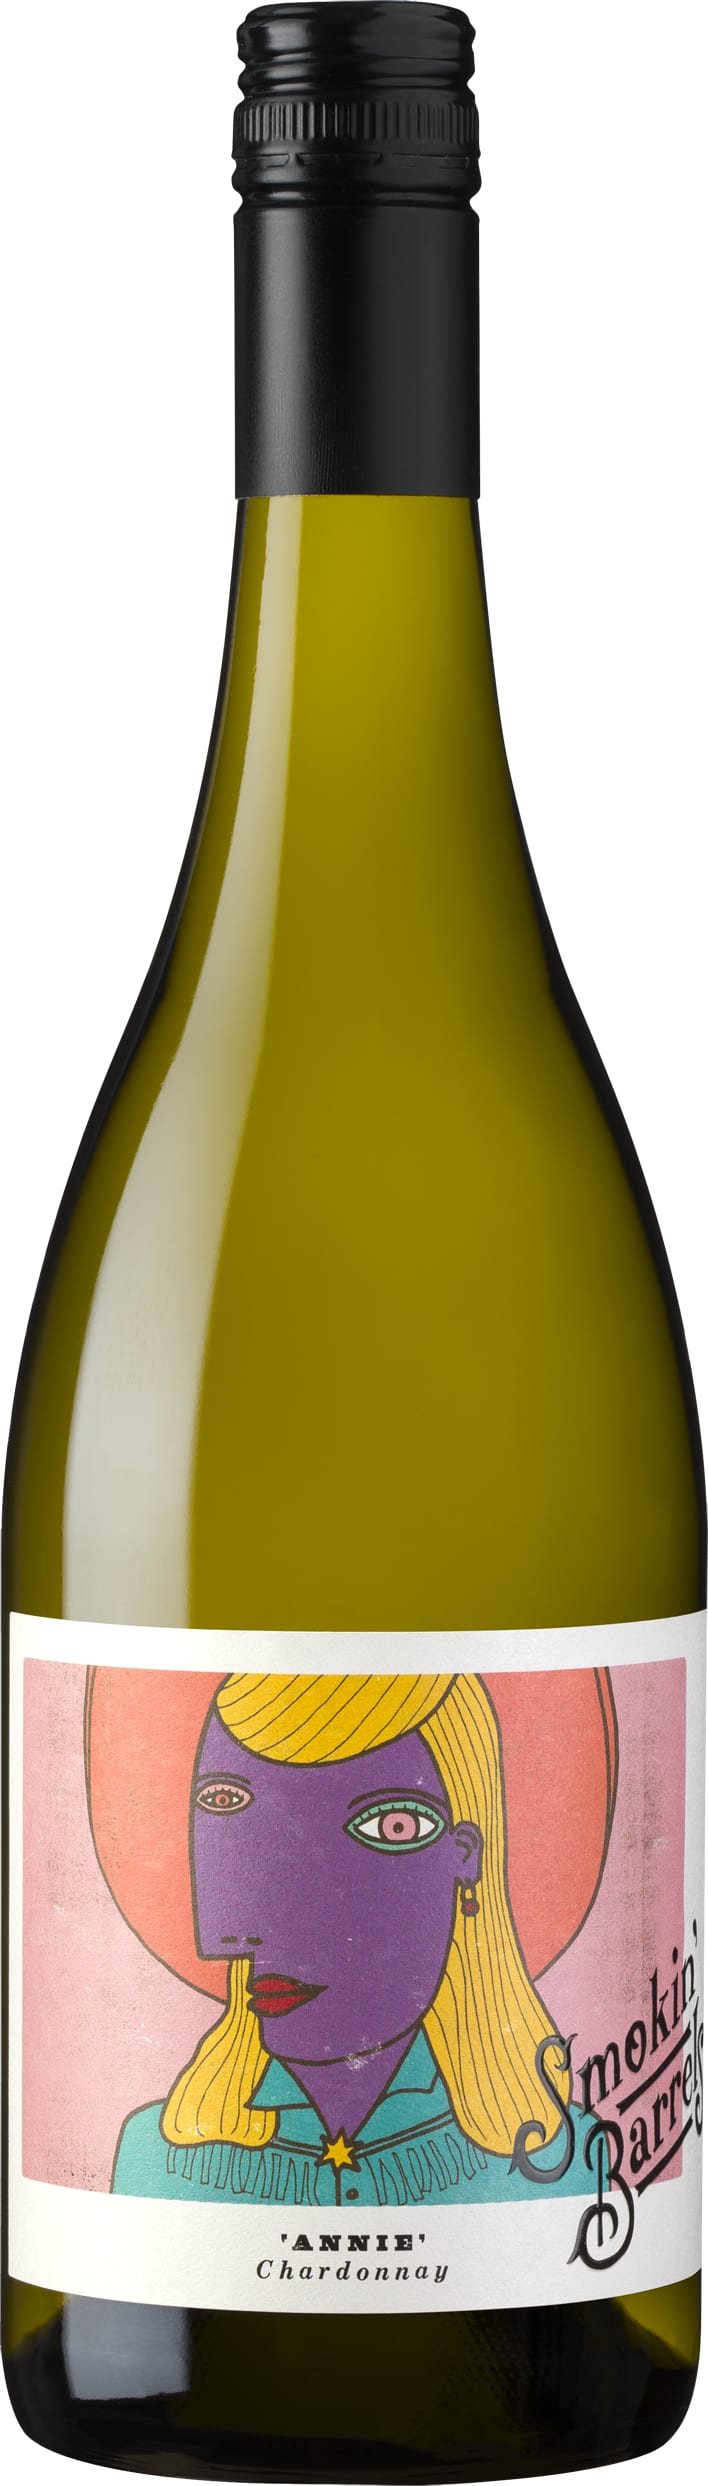 Smokin' Barrels "Annie" Chardonnay 2021 75cl - Buy Smokin' Barrels Wines from GREAT WINES DIRECT wine shop